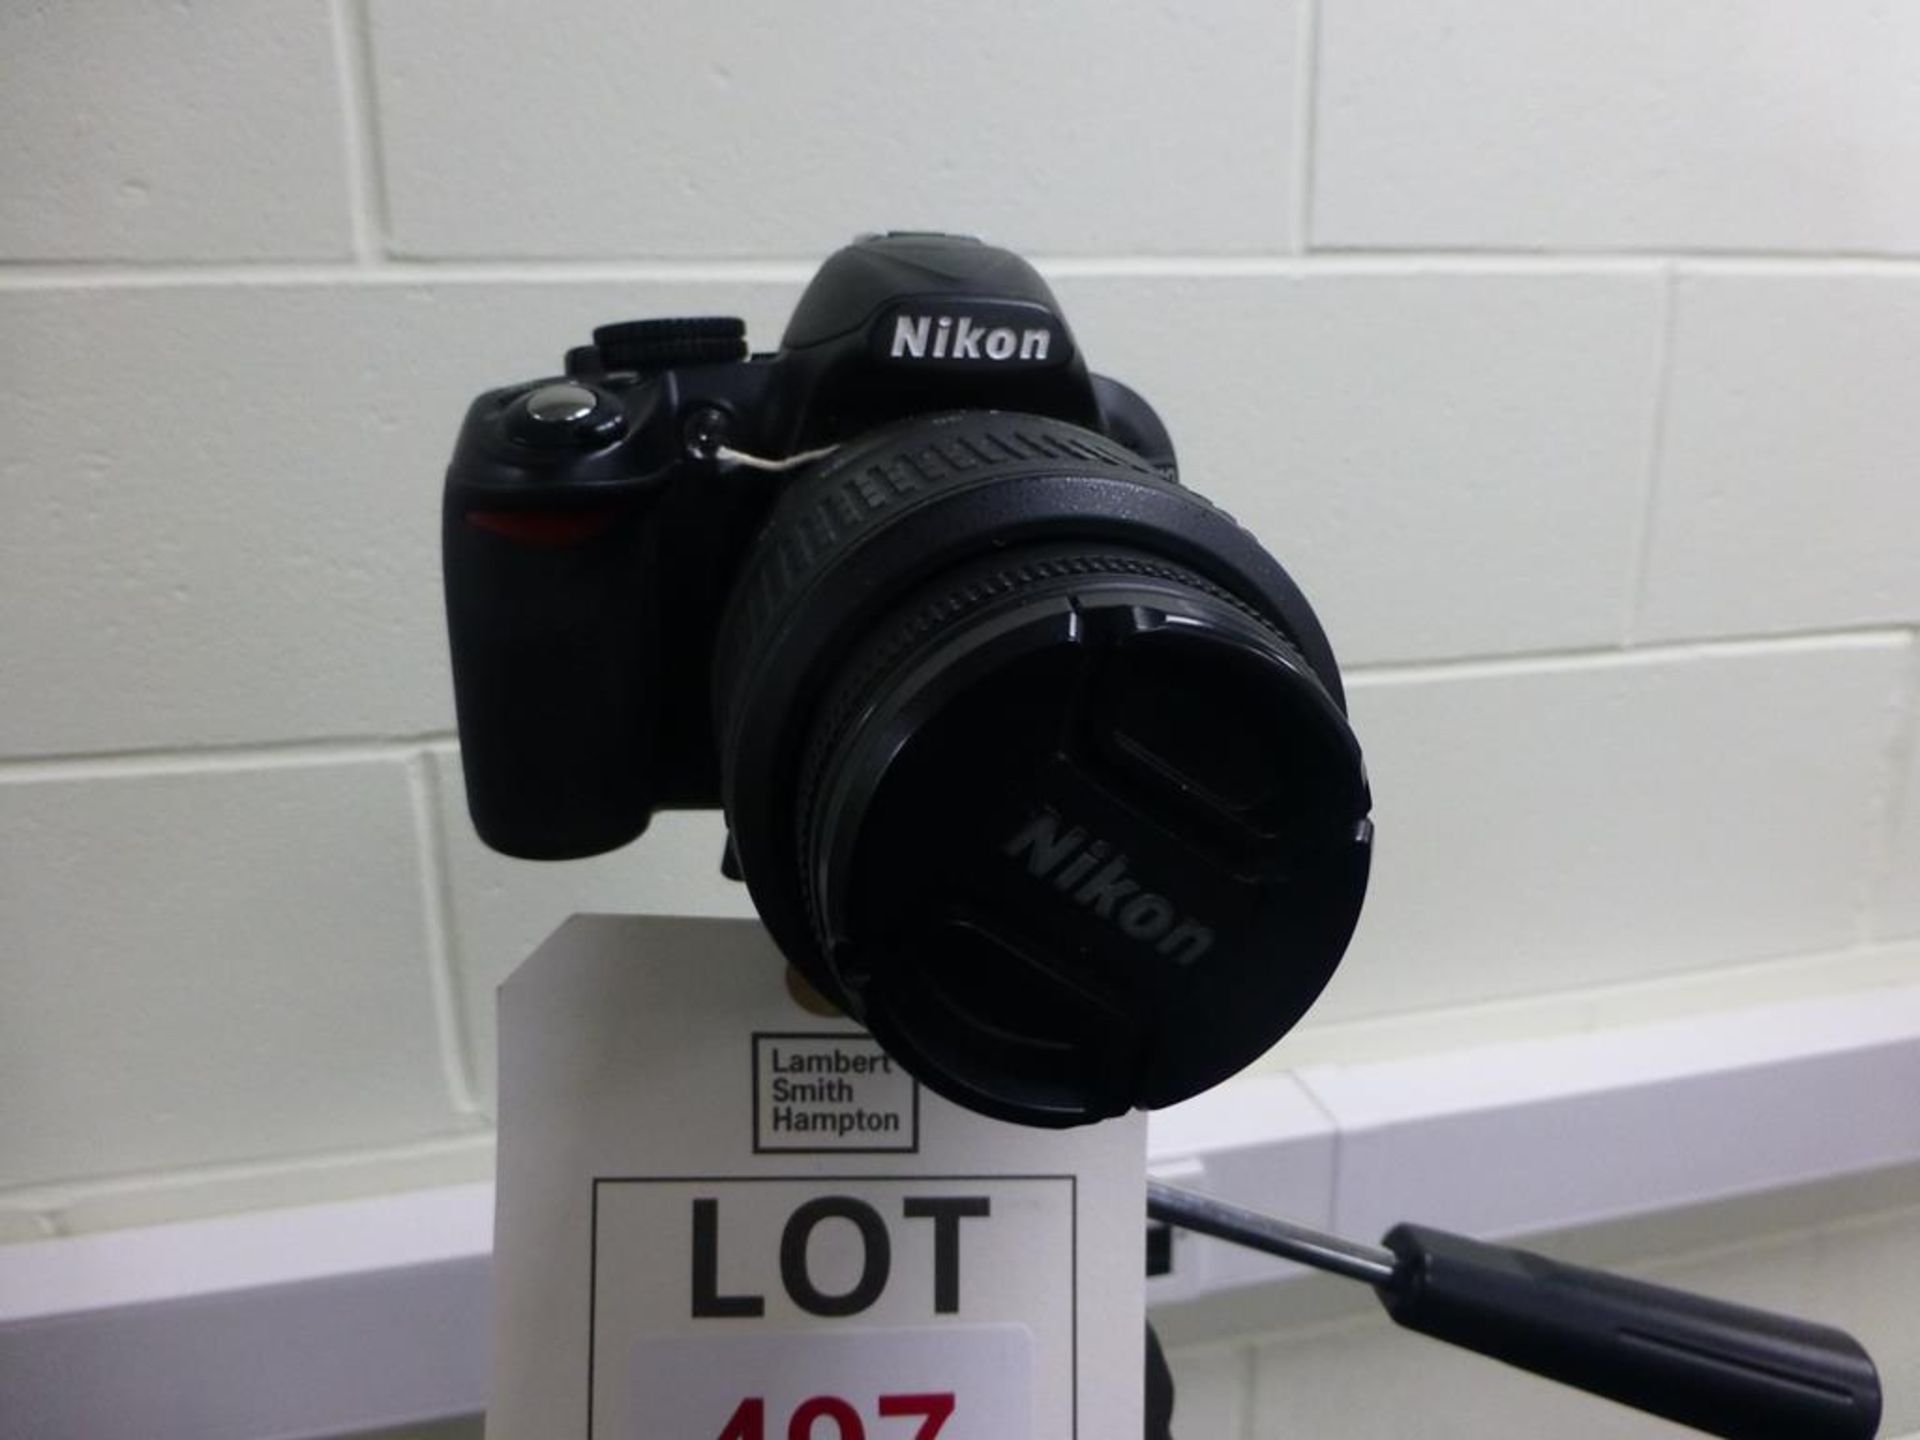 Nikon D3100 digital SLR camera with Nikon DXAF-SNIKKOR18-55mm lens, tripod, Nikon MH-25 charging - Image 2 of 2